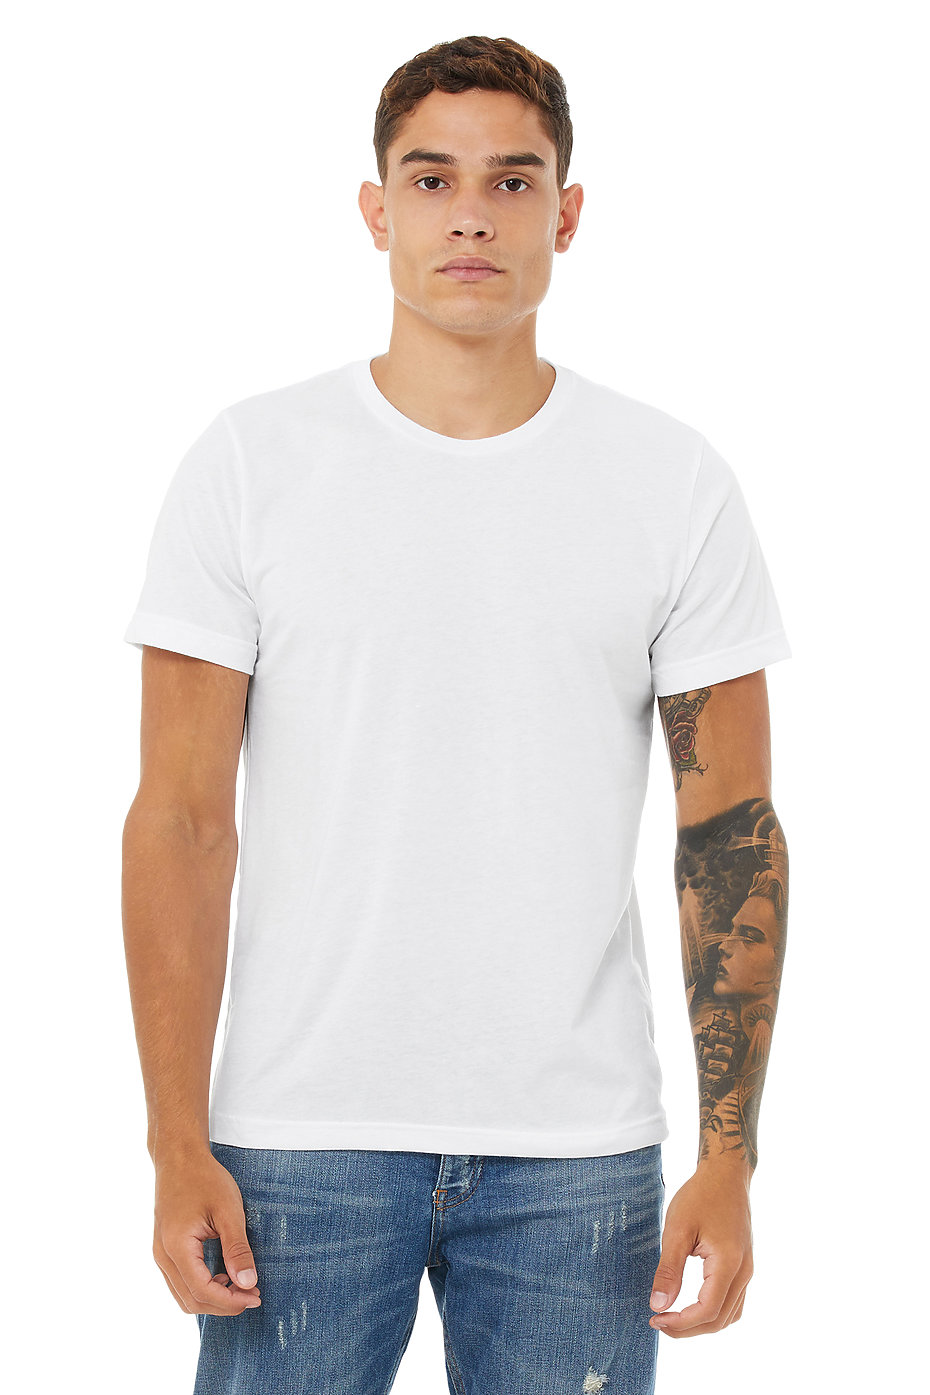 discount 92% White M Springfield Shirt MEN FASHION Shirts & T-shirts NO STYLE 